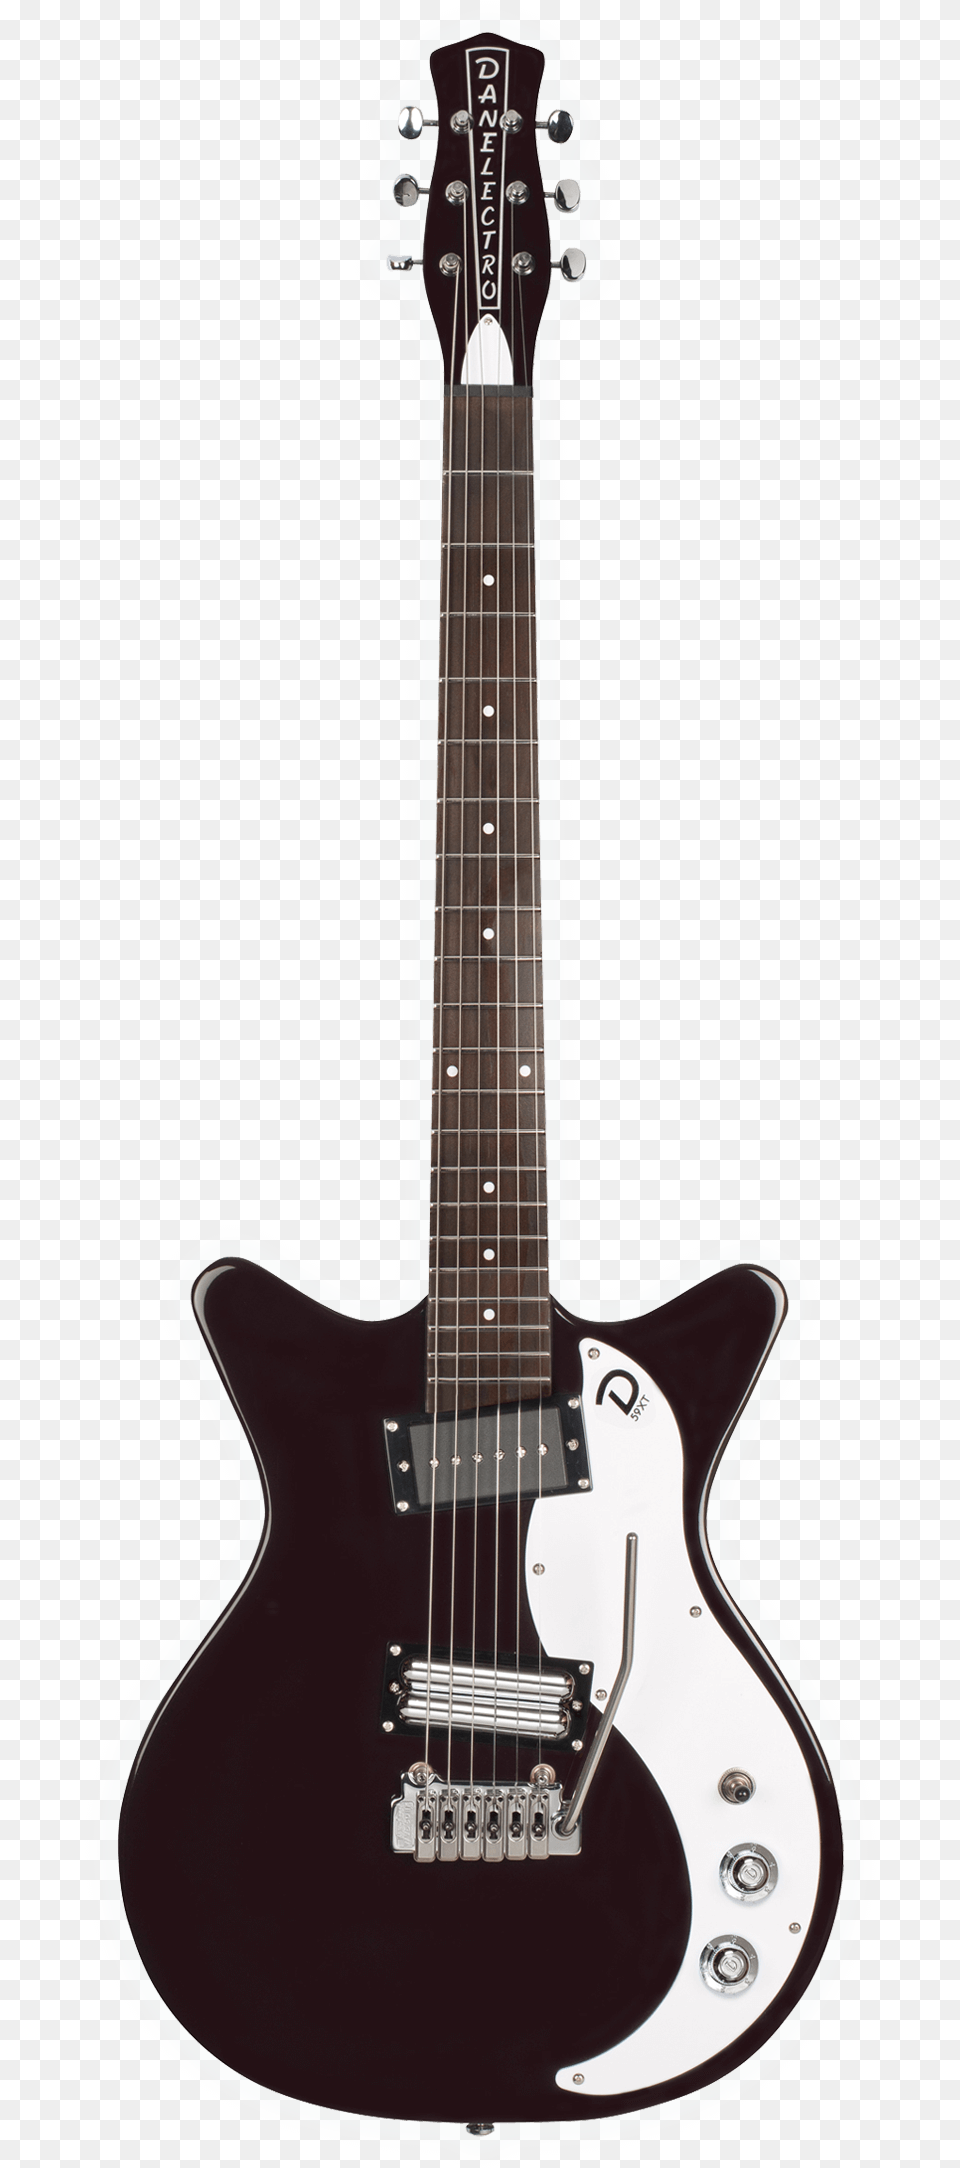 Danelectro 59xt Black, Bass Guitar, Guitar, Musical Instrument, Electric Guitar Png Image